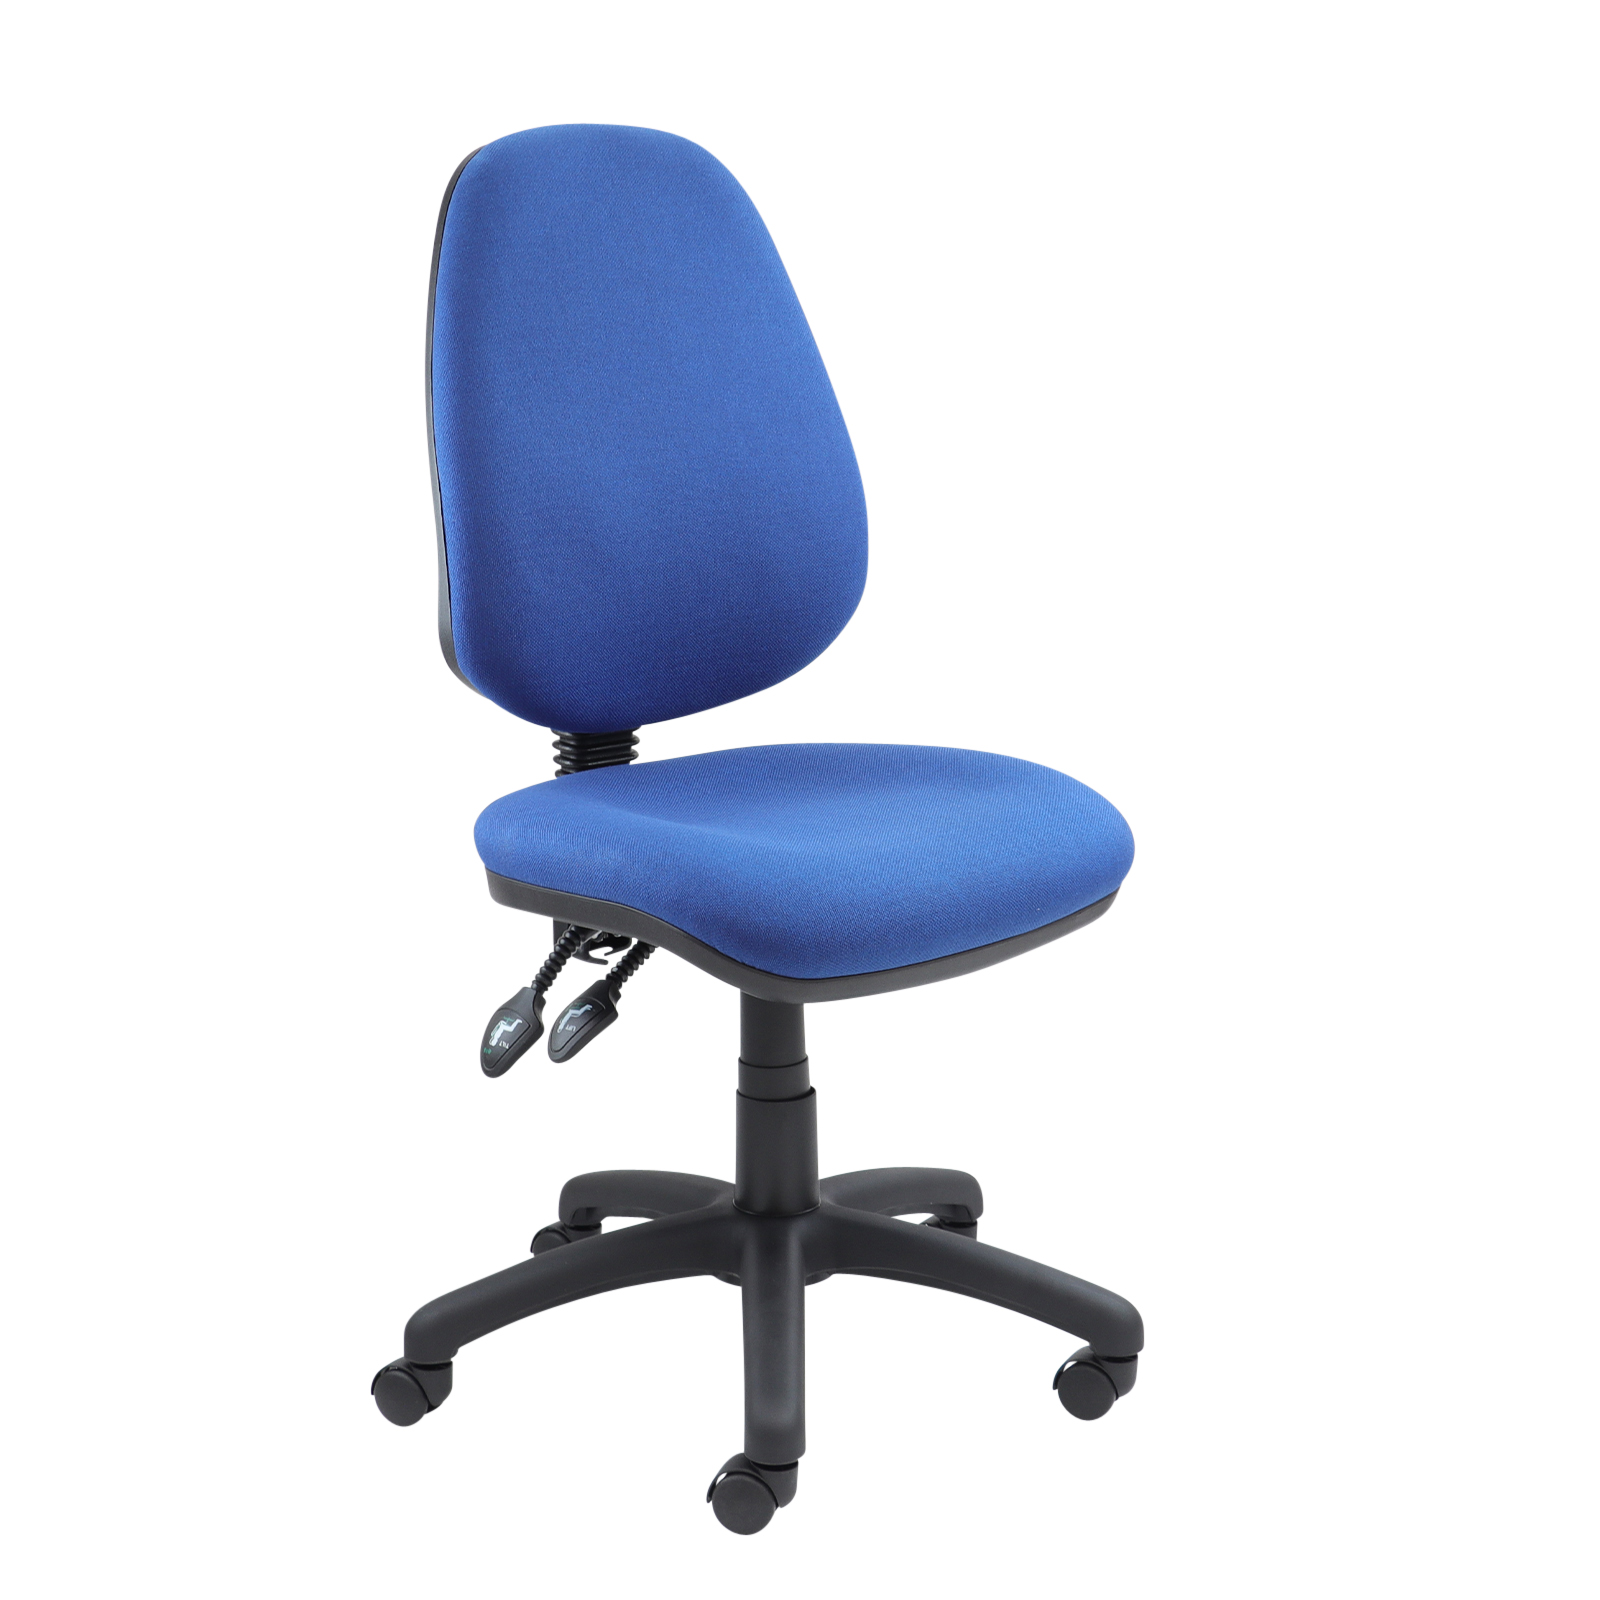 Vantage 100 2 lever PCB Operators Chair